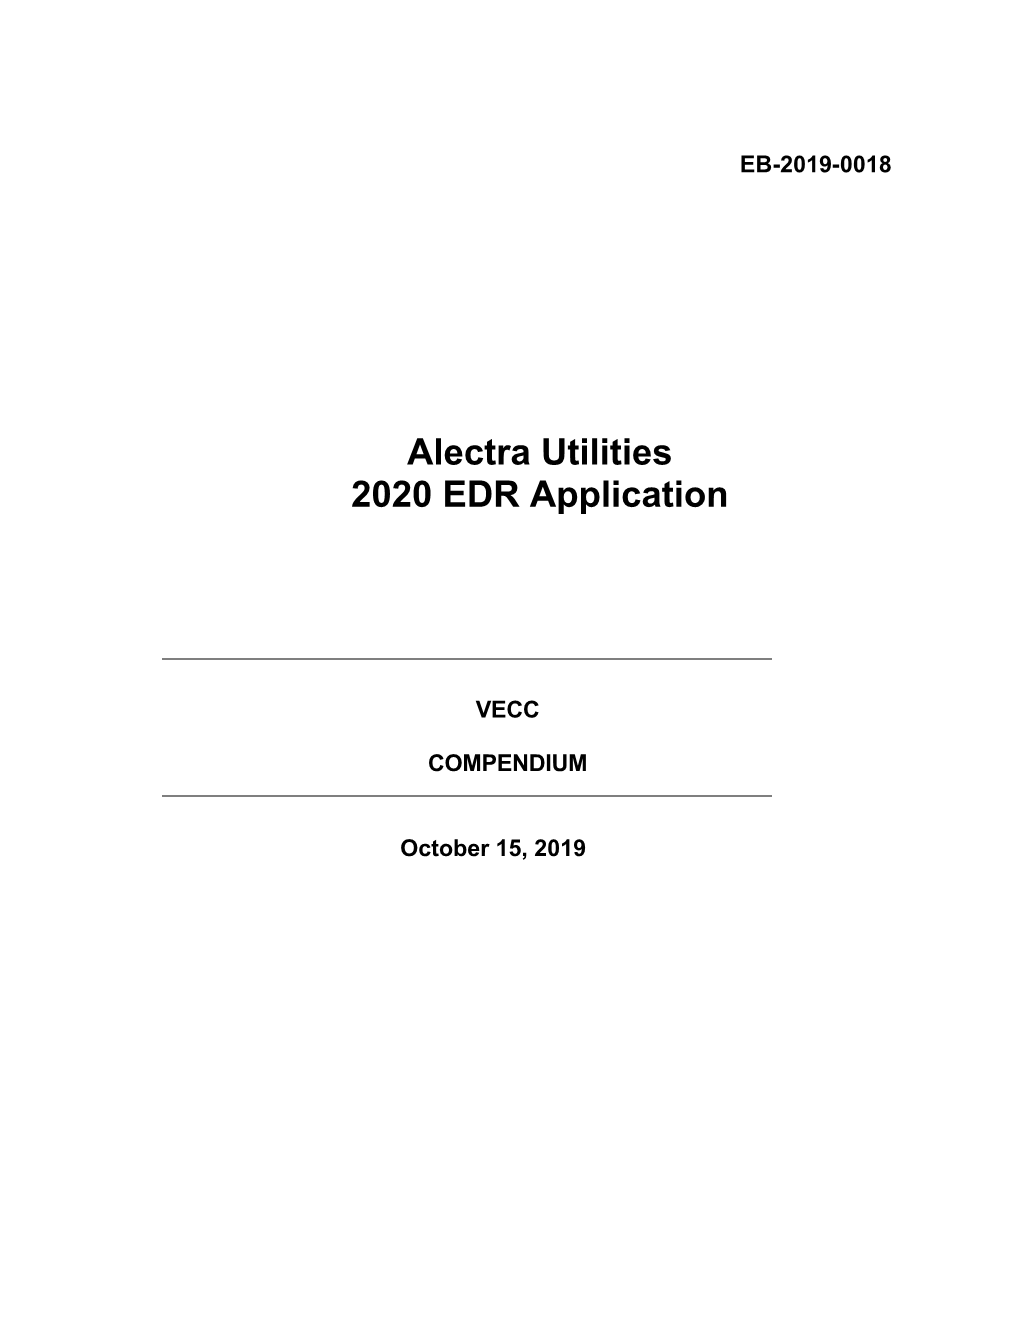 Alectra Utilities 2020 EDR Application